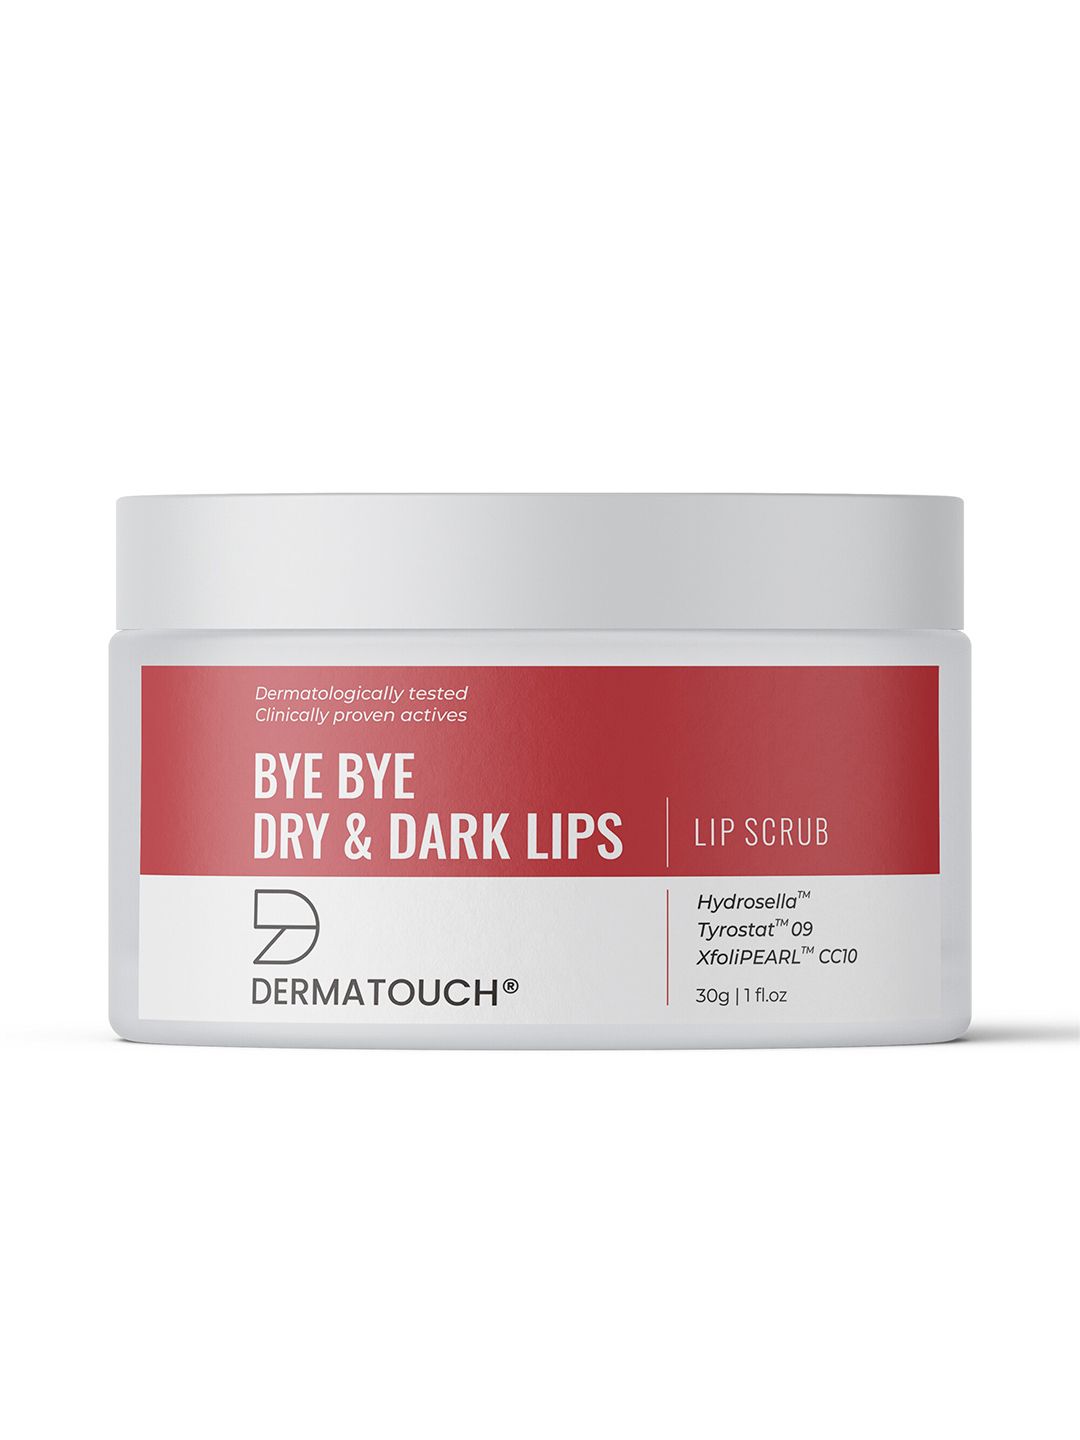 Dermatouch Bye Bye Dry & Dark Lips Scrub with Hydrosella - 30g Price in India